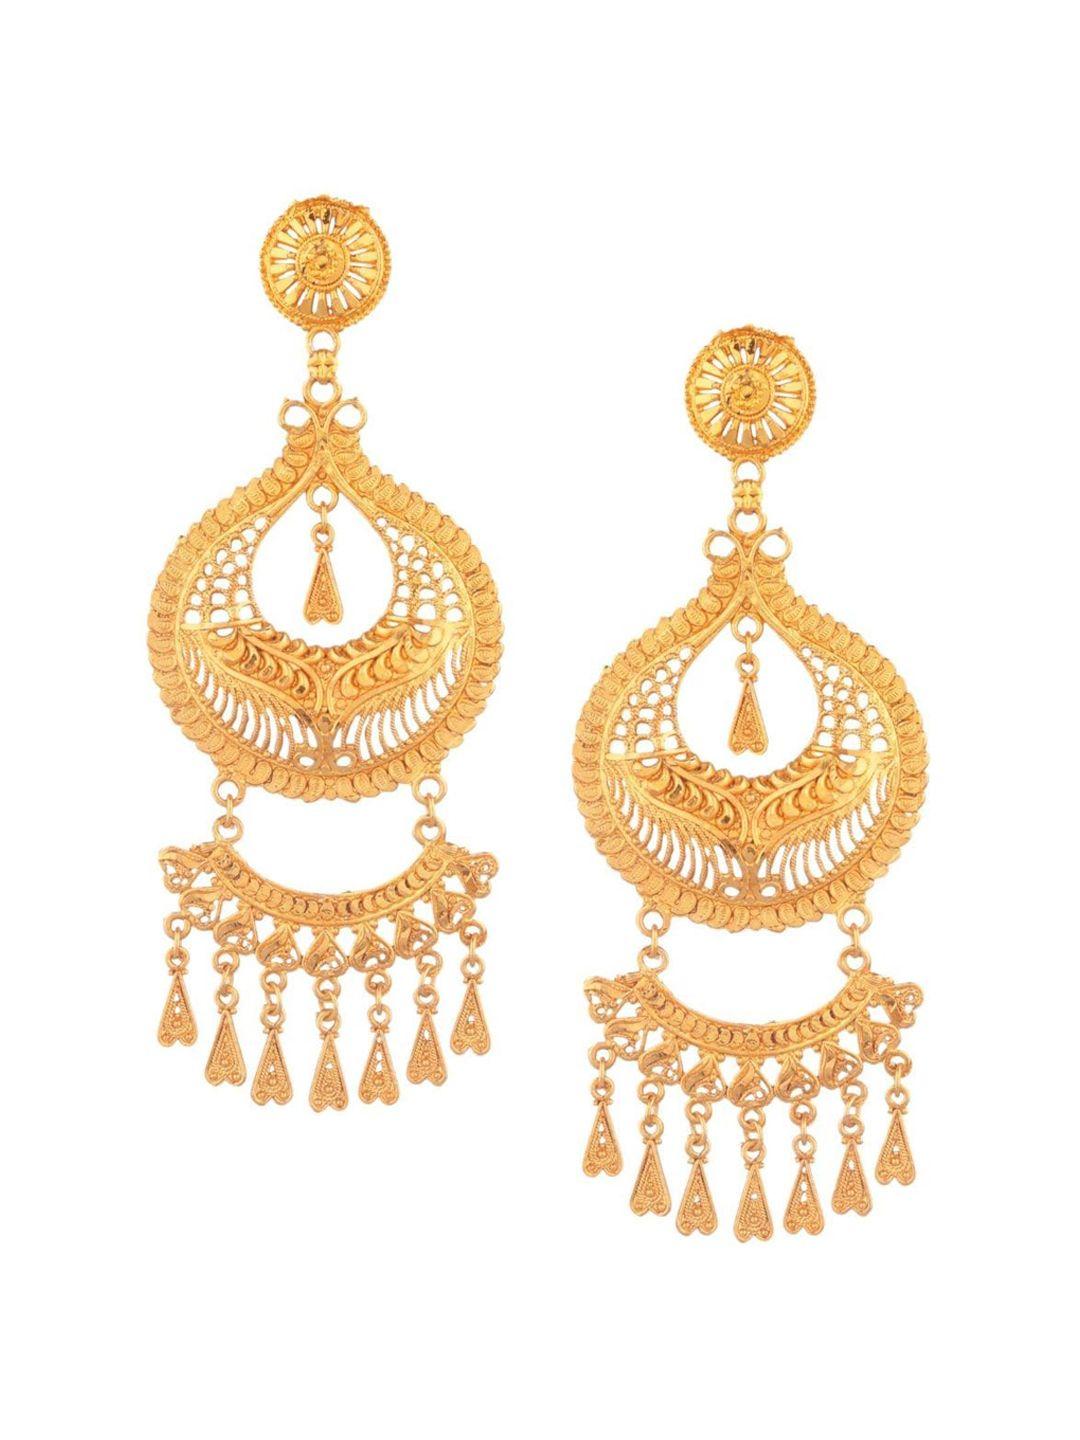 efulgenz gold-toned circular chandbalis earrings